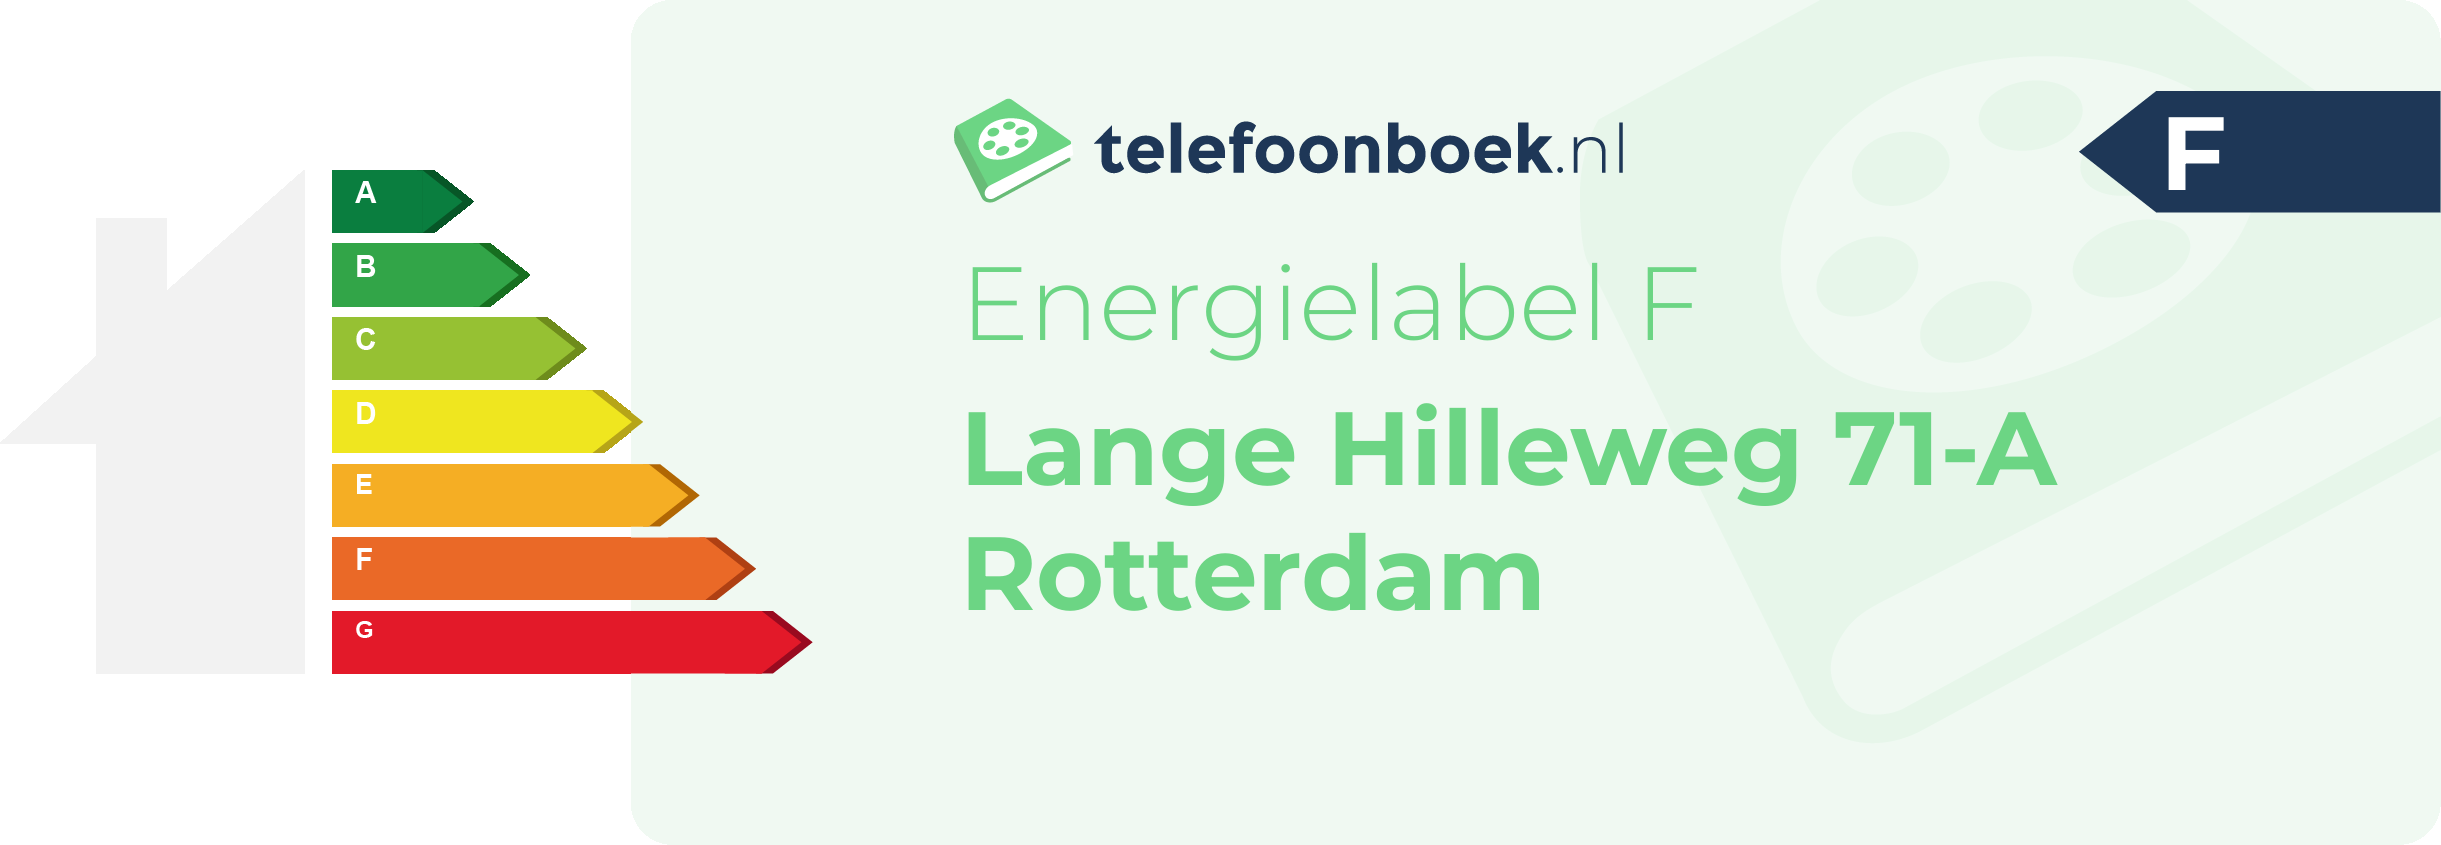 Energielabel Lange Hilleweg 71-A Rotterdam